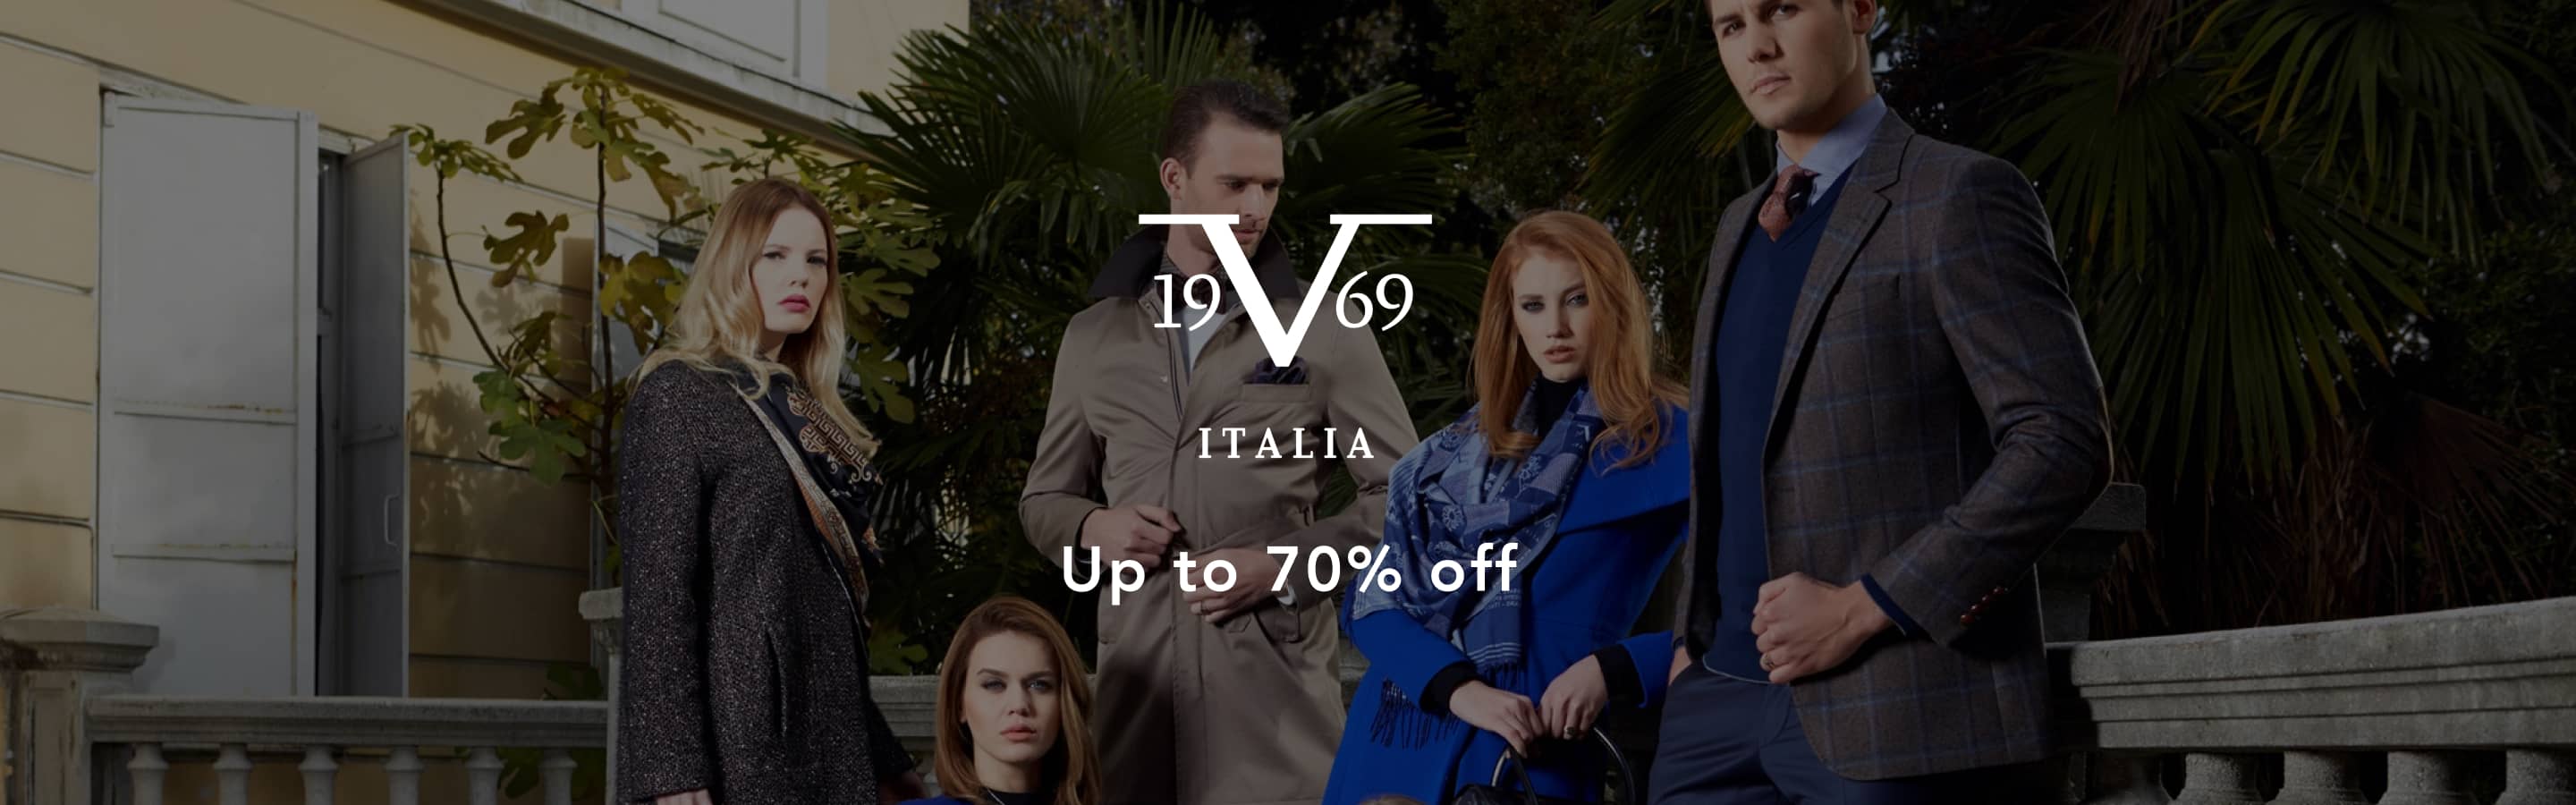 Versace 19V69 Outlet | Savings on Clothing, Sunglasses & more | Secret Sales